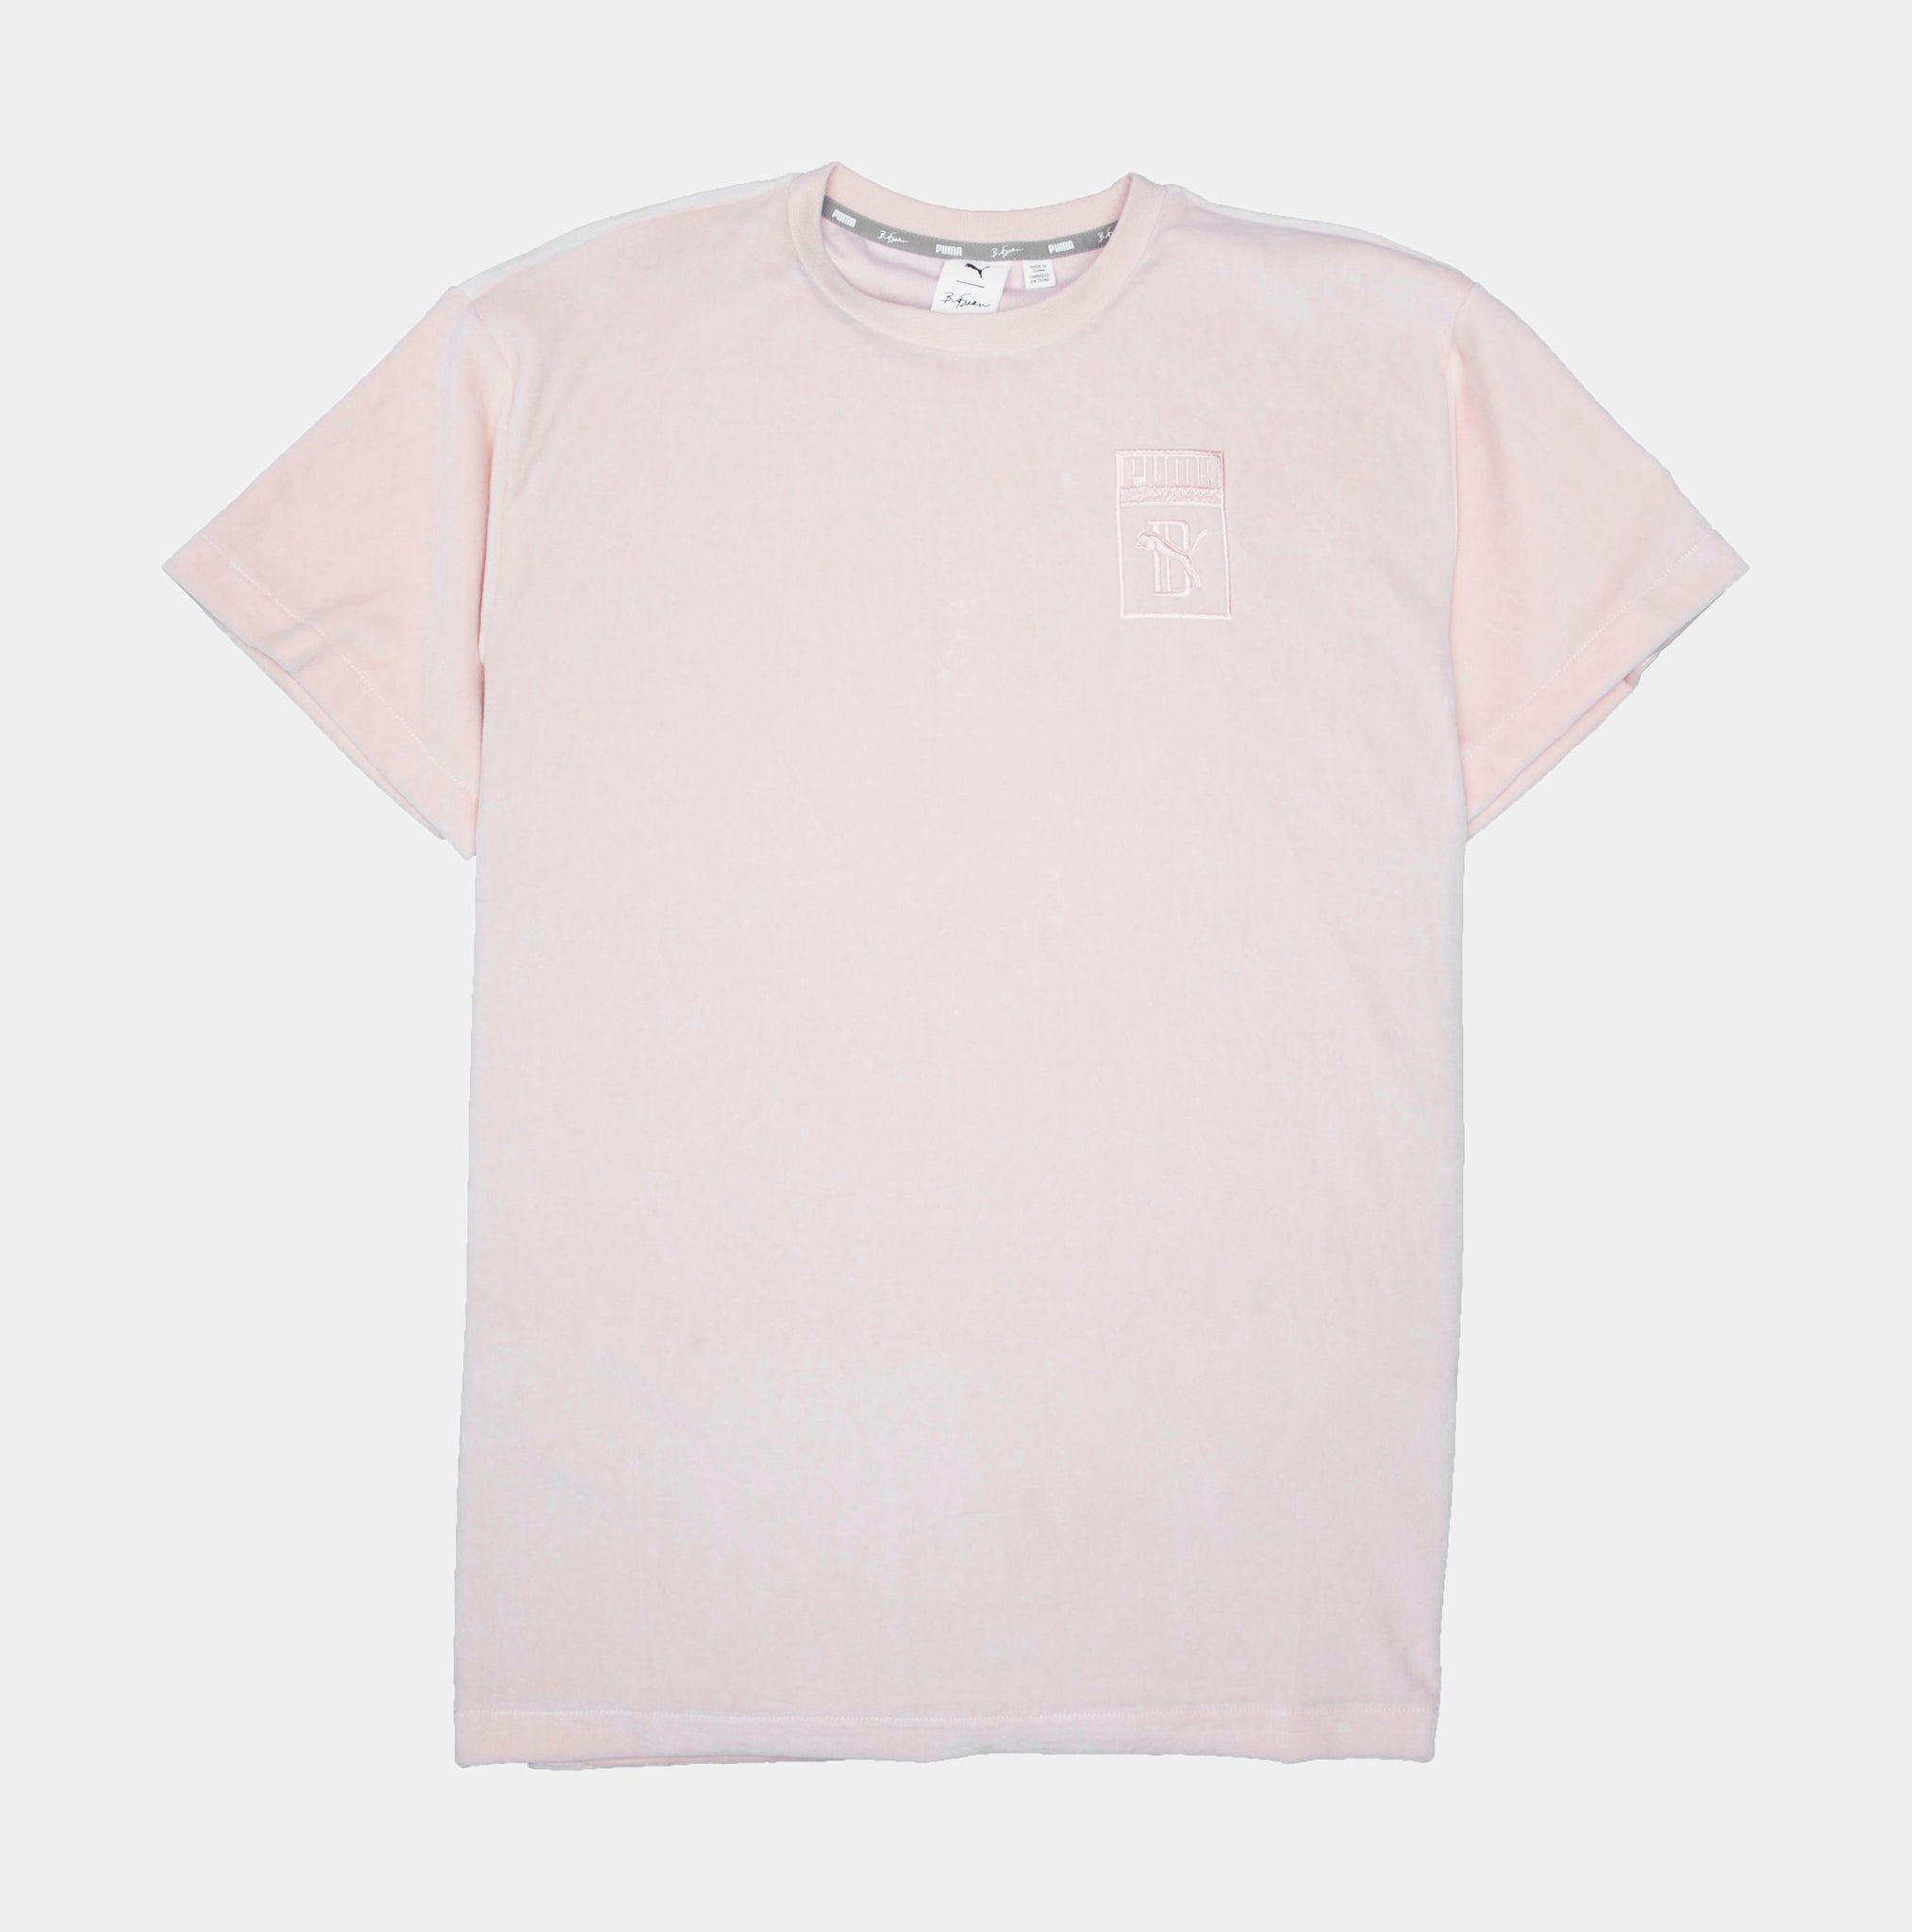 PUMA PUMA x Big Sean T-Shirt Shoe – Collection 85 Shipping Free Palace Pink 575918 Mens